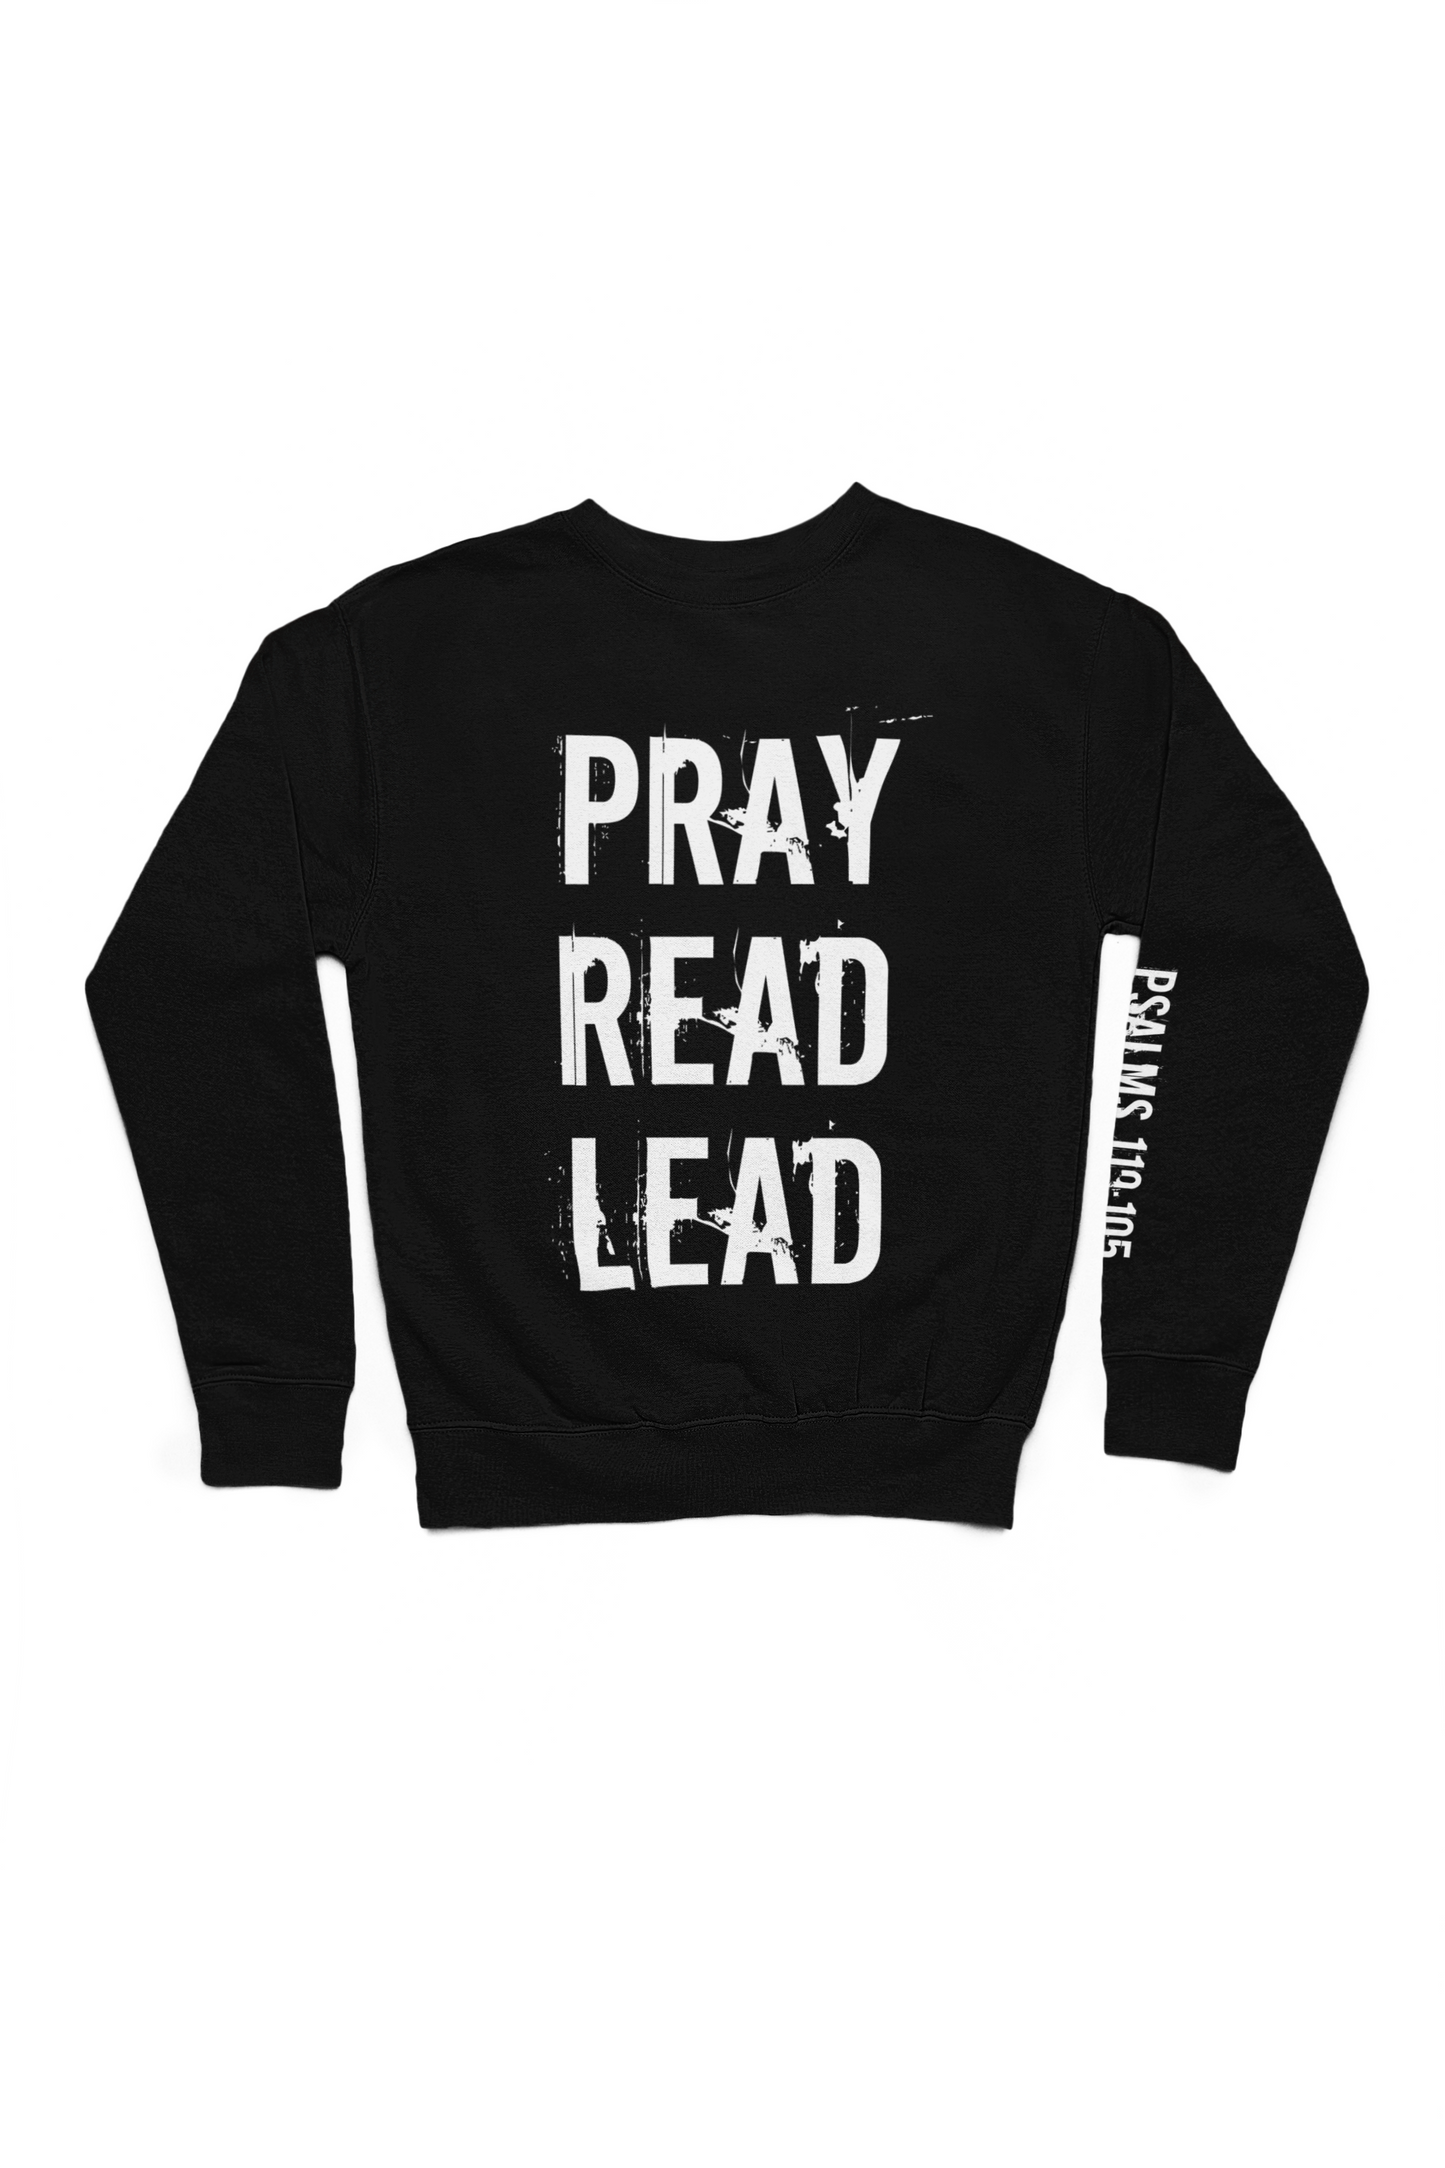 PRAY READ LEAD Sweatshirt (Neutral Colors)